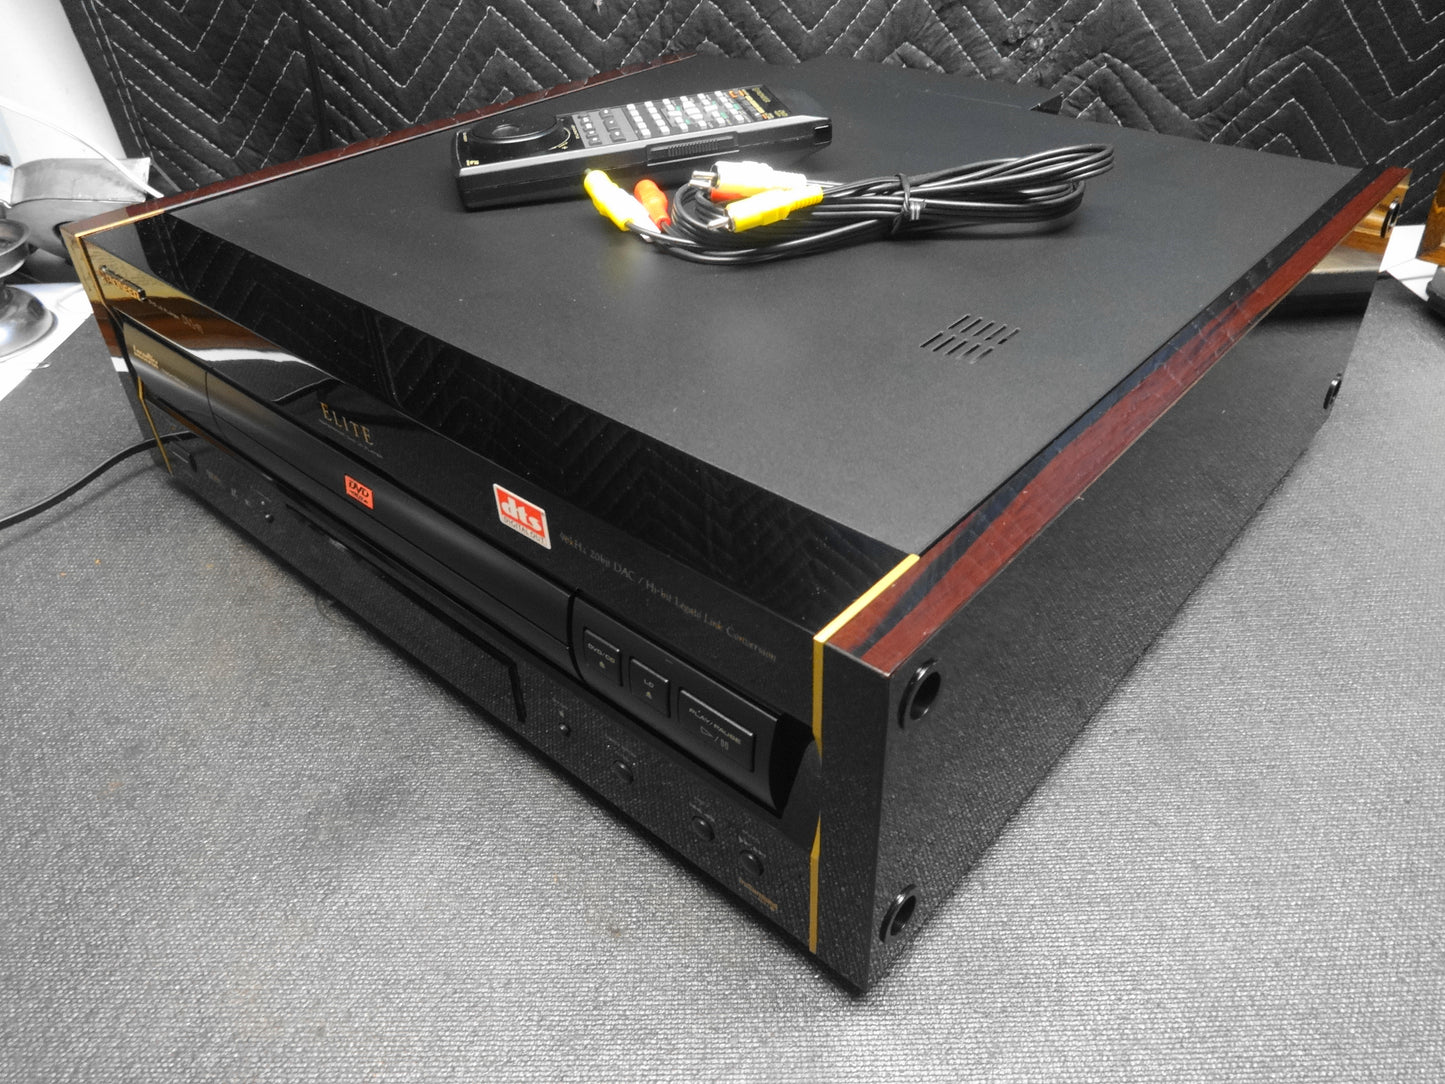 Pioneer Elite DVL-91 LaserDisc Player w/ Remote & Cables - *SERVICED*